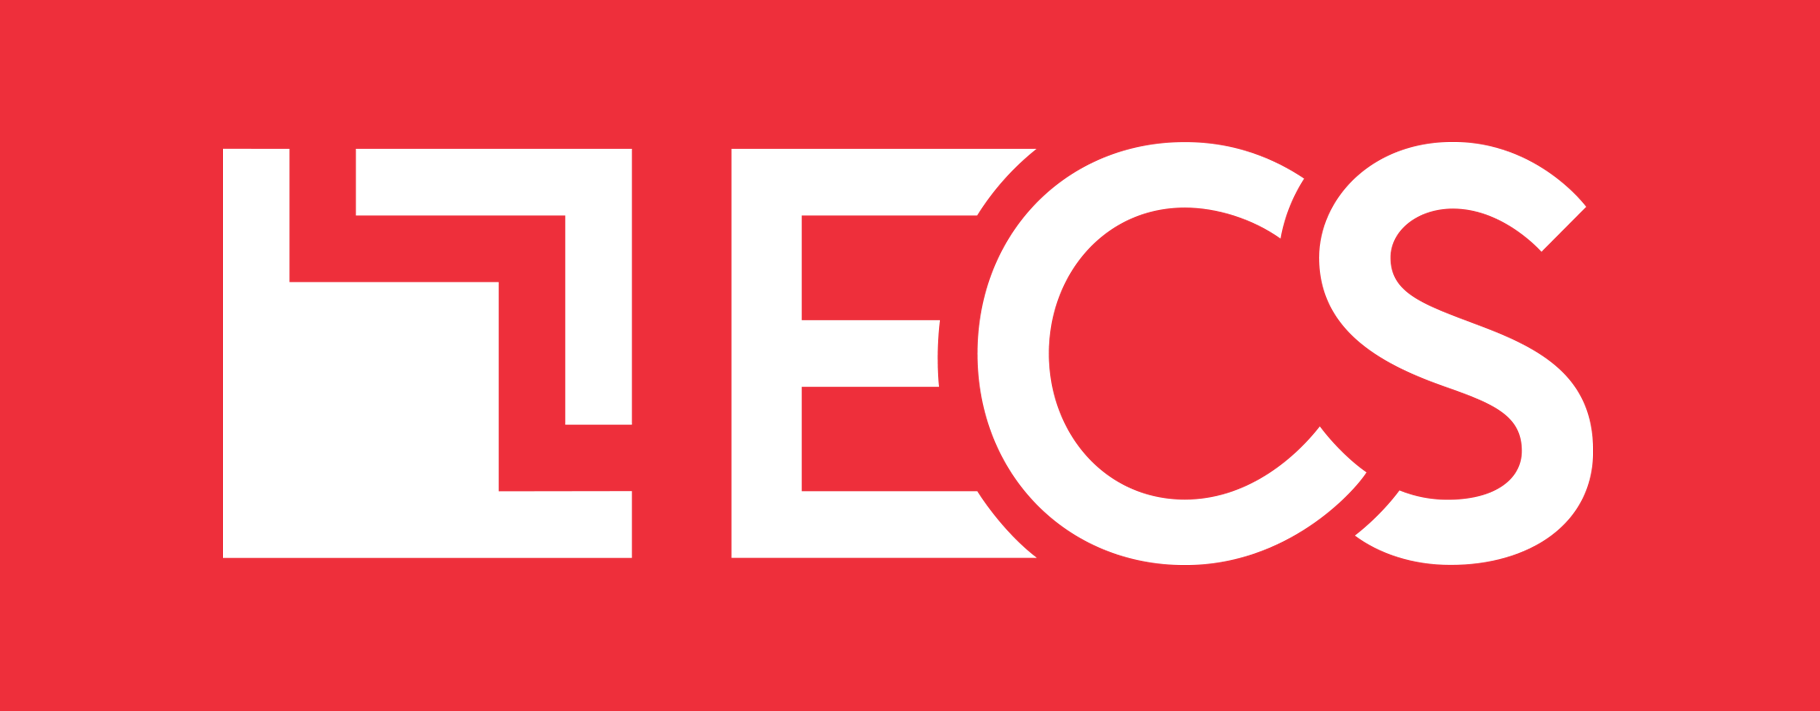 ecs_redesign_logo